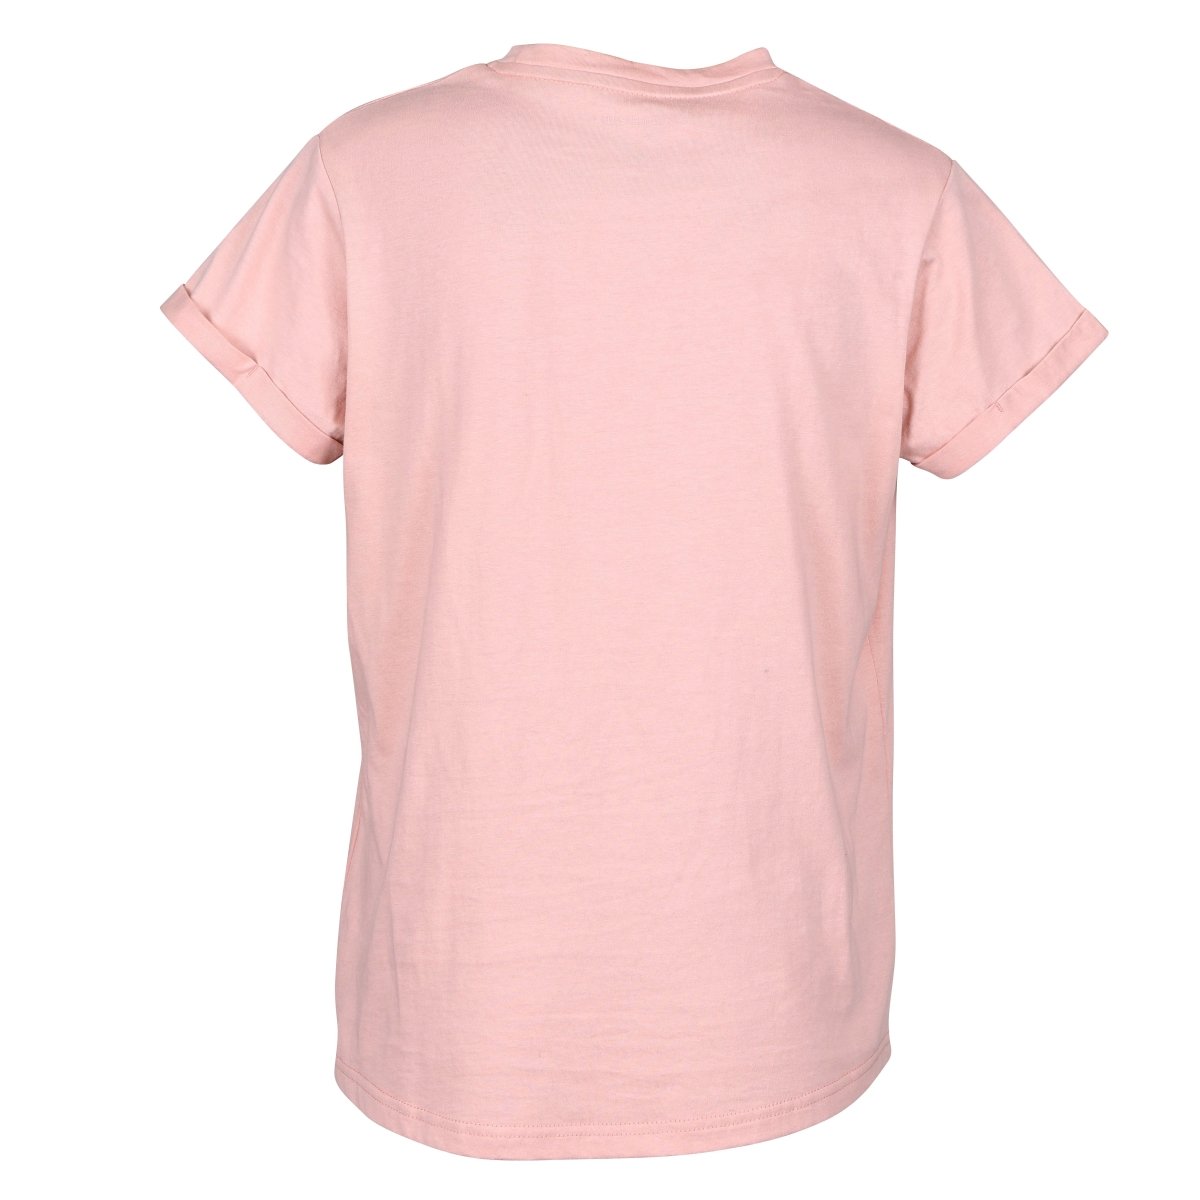 Aubrion Repose T-Shirt - Rose - XXXL